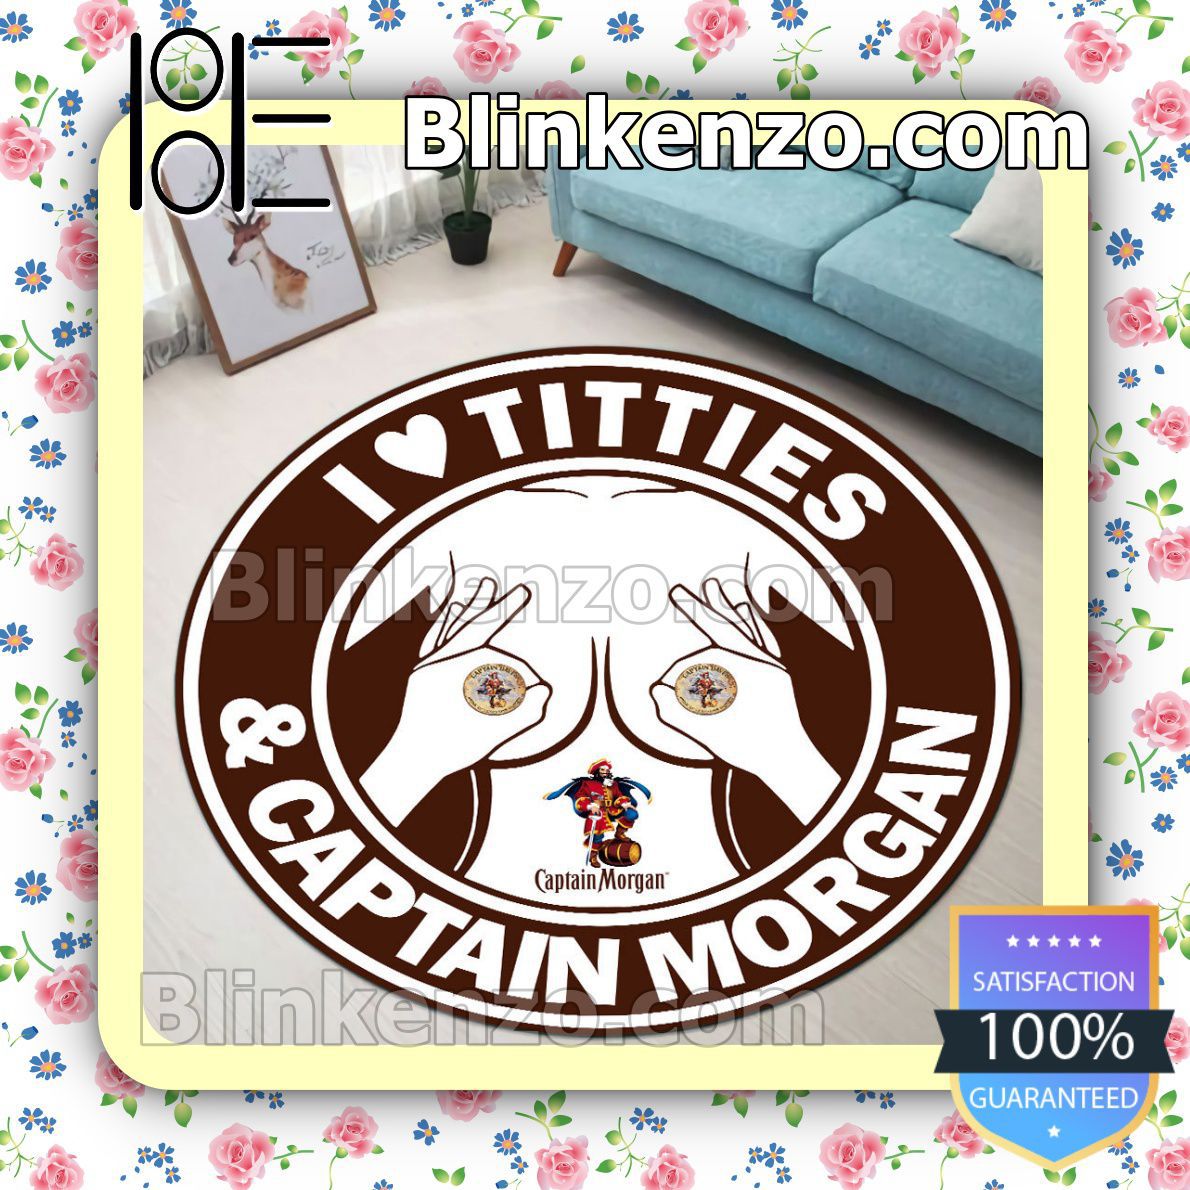 Supreme Louis Vuitton Dark Brown Monogram Custom Womens Hoodie - Blinkenzo